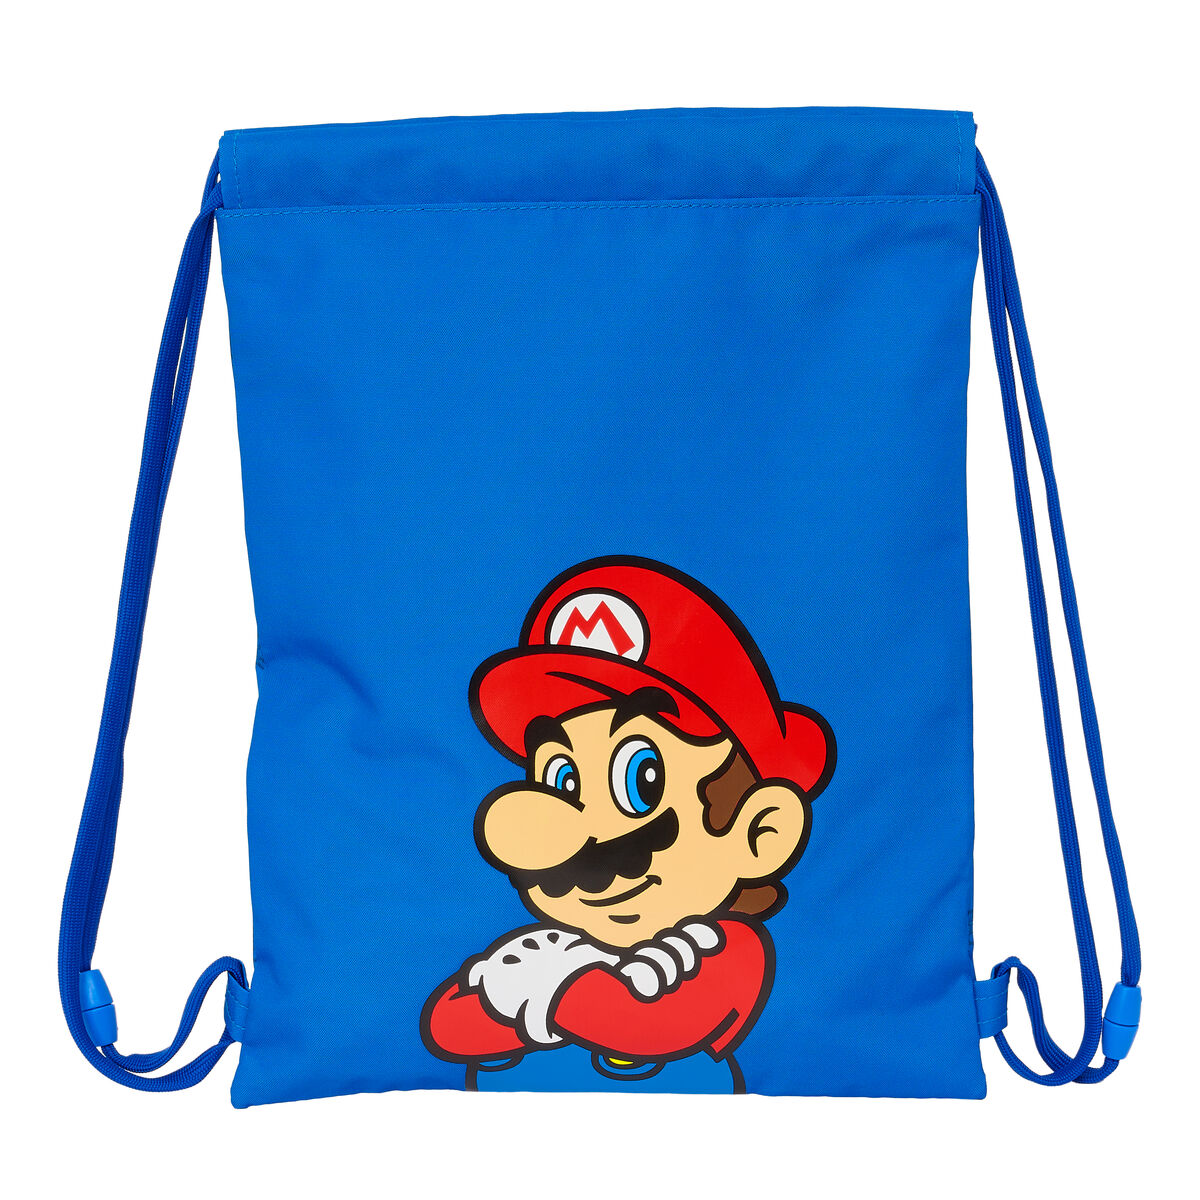 Bolsa Mochila Con Cuerdas Super Mario Play 26 X 34 X 1 Cm - azul - 